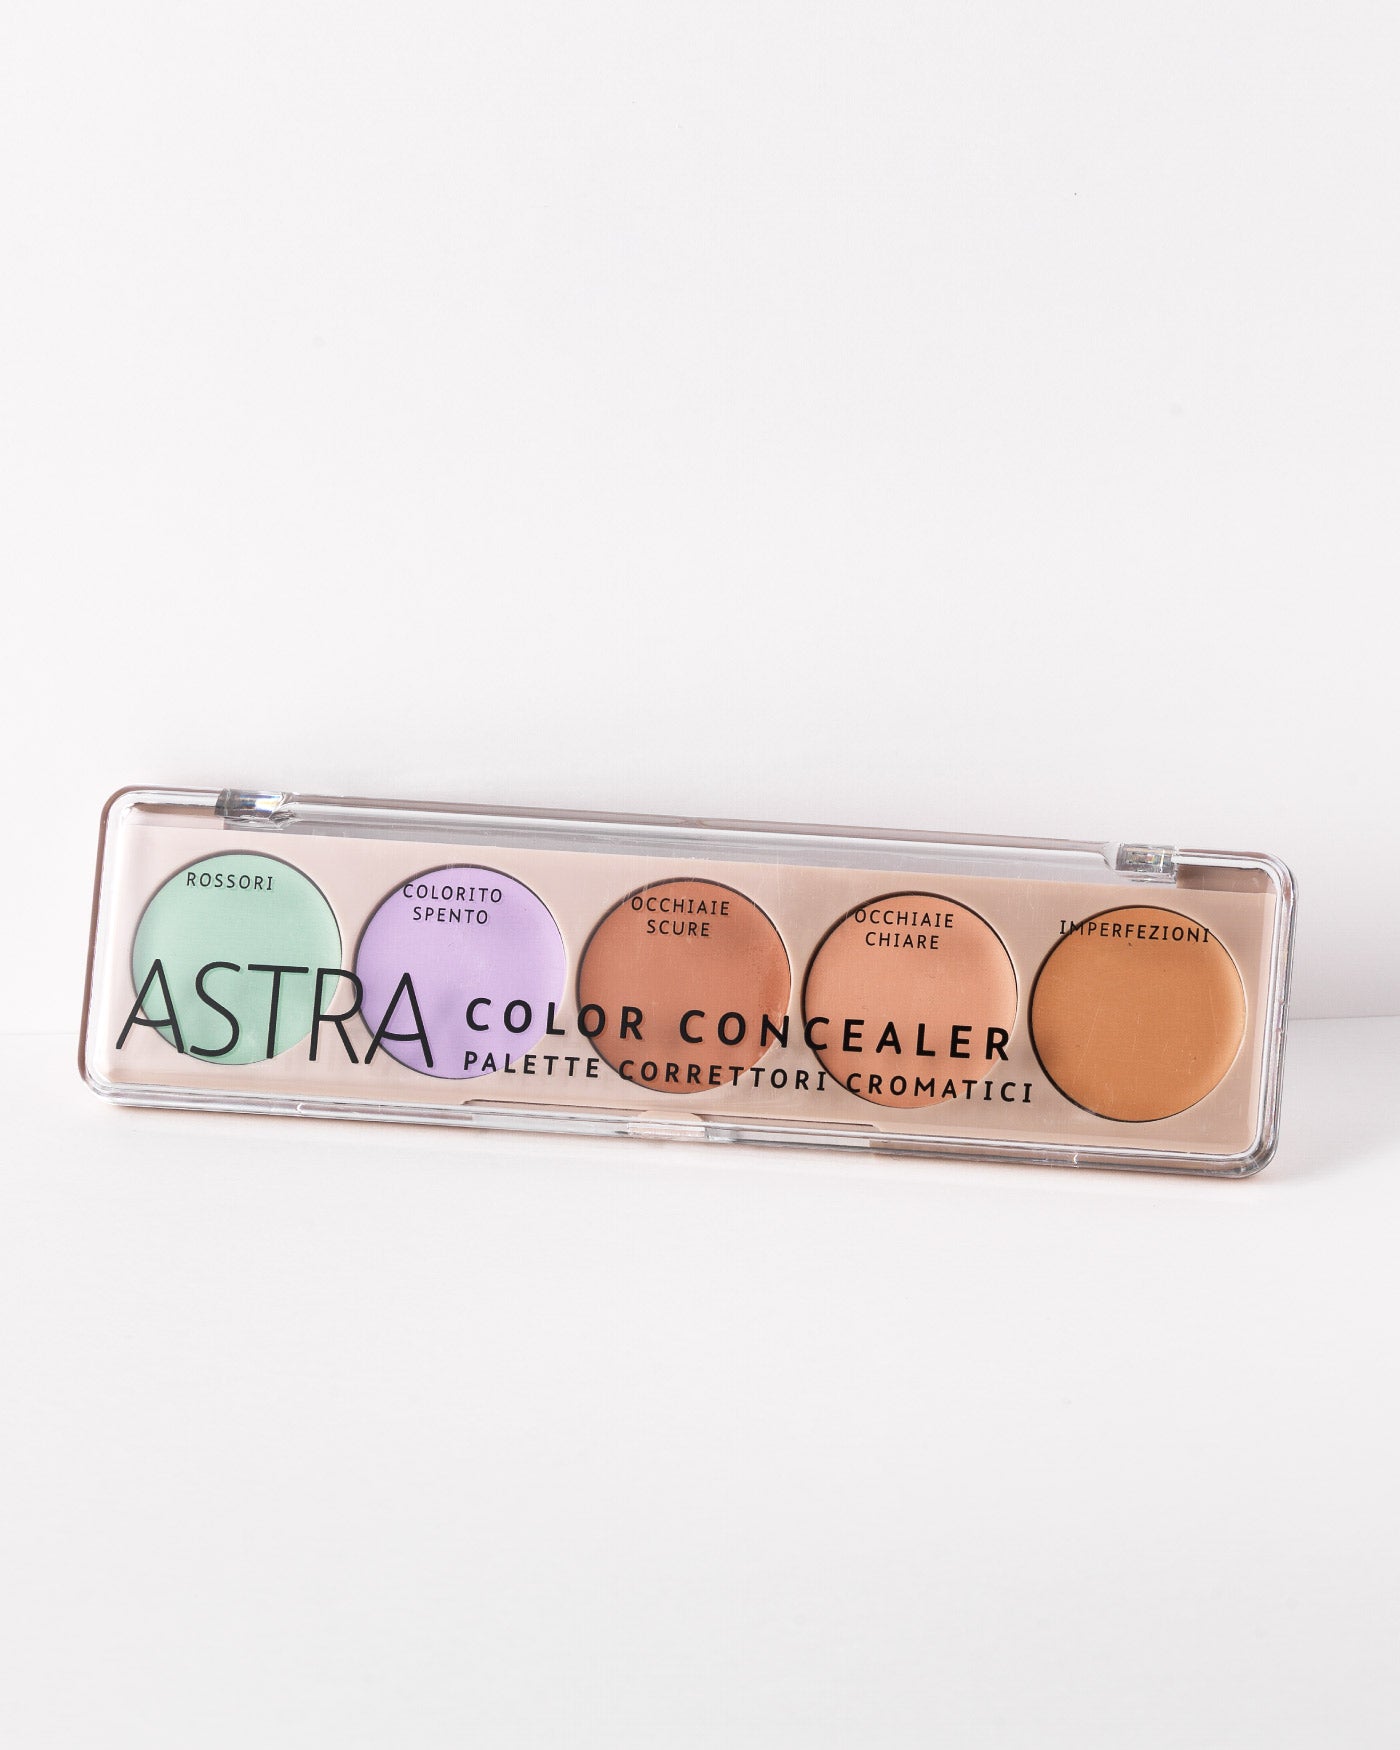 COLOR CONCEALER - Palette Viso Correttori Cromatici - 01 - Camouflage - Astra Make-Up